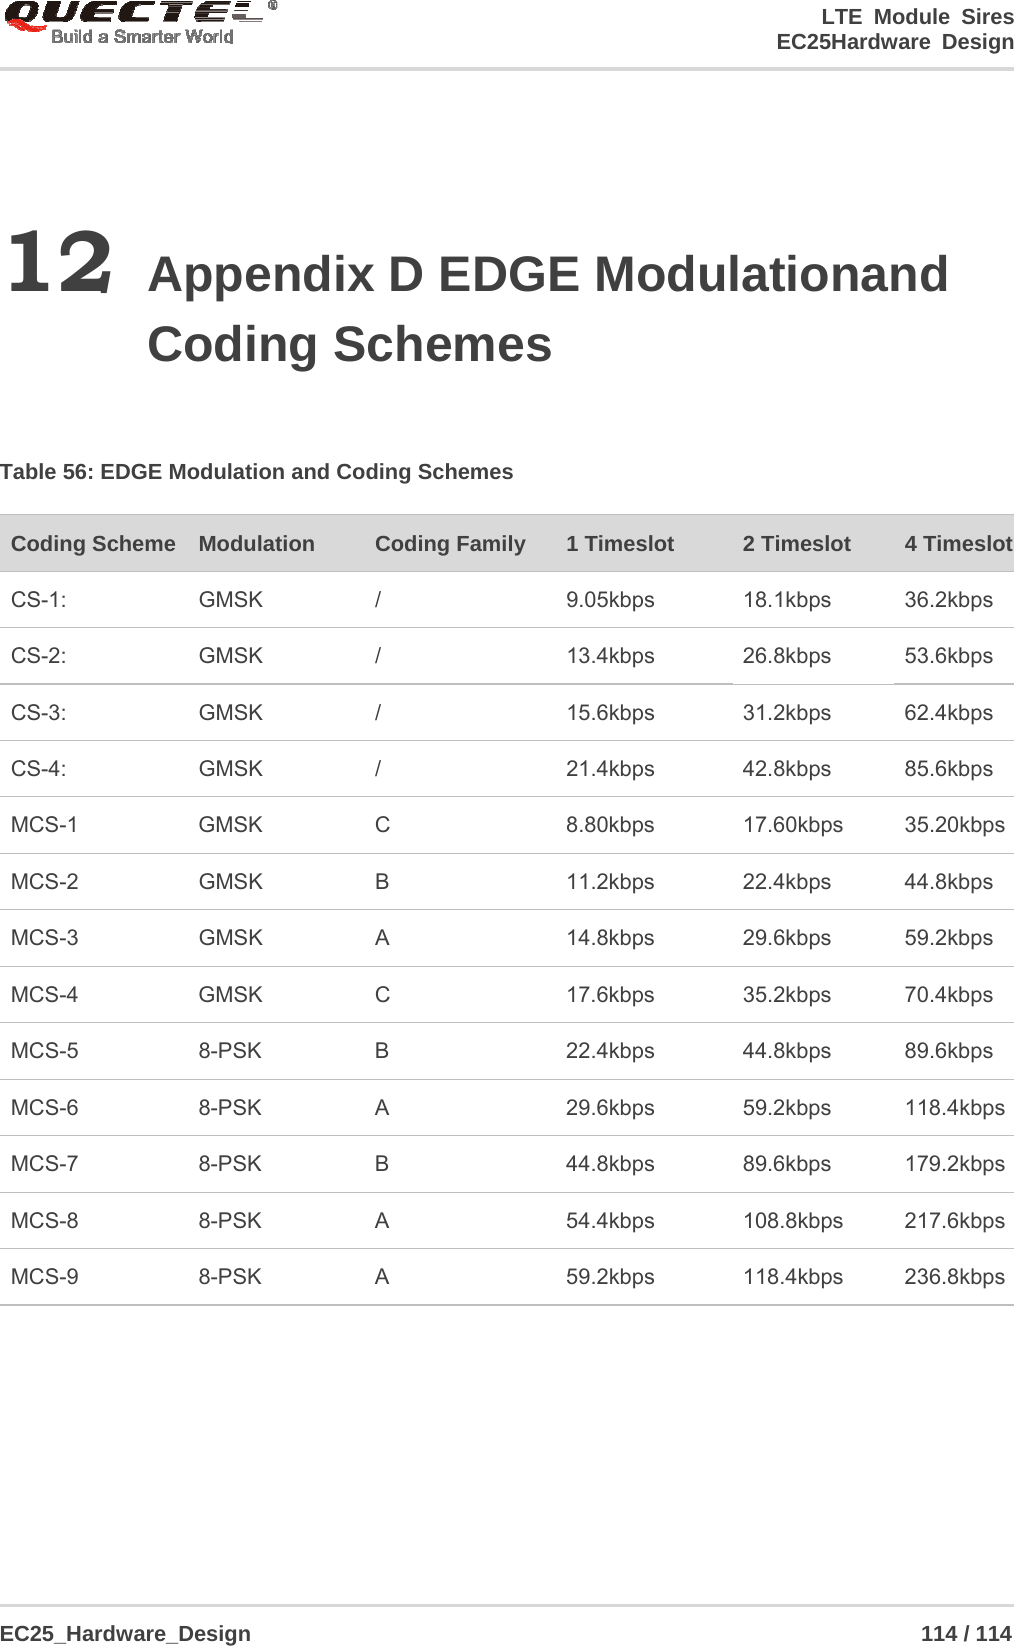 LTE Module Sires                                                                 EC25Hardware Design  EC25_Hardware_Design                                                             114 / 114    12 Appendix D EDGE Modulationand Coding Schemes  Table 56: EDGE Modulation and Coding Schemes      Coding Scheme Modulation  Coding Family 1 Timeslot 2 Timeslot  4 TimeslotCS-1: GMSK /  9.05kbps 18.1kbps 36.2kbps CS-2: GMSK /  13.4kbps 26.8kbps 53.6kbps CS-3: GMSK /  15.6kbps 31.2kbps 62.4kbps CS-4: GMSK /  21.4kbps 42.8kbps 85.6kbps MCS-1 GMSK C  8.80kbps 17.60kbps 35.20kbps MCS-2 GMSK B  11.2kbps 22.4kbps 44.8kbps MCS-3 GMSK A  14.8kbps 29.6kbps 59.2kbps MCS-4 GMSK C  17.6kbps 35.2kbps 70.4kbps MCS-5 8-PSK B  22.4kbps 44.8kbps 89.6kbps MCS-6 8-PSK A  29.6kbps 59.2kbps 118.4kbps MCS-7 8-PSK B  44.8kbps 89.6kbps 179.2kbps MCS-8 8-PSK A  54.4kbps 108.8kbps 217.6kbps MCS-9 8-PSK A  59.2kbps 118.4kbps 236.8kbps 